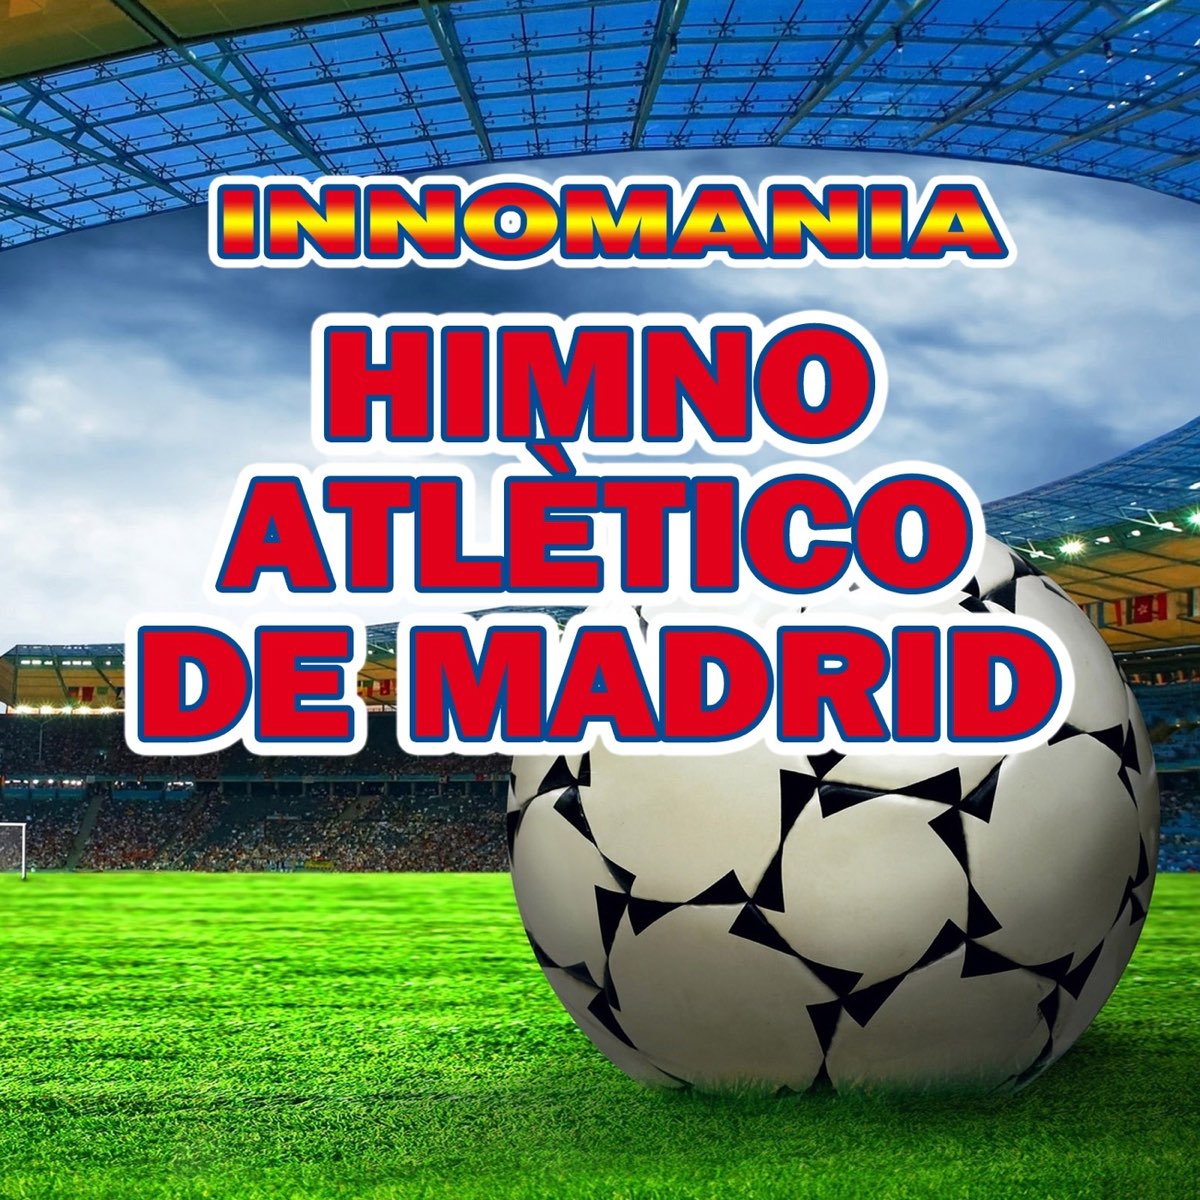 Himno atlético de Madrid - Inno atletico Madrid - Single di Innomania  present B.B. Spanish Group su Apple Music